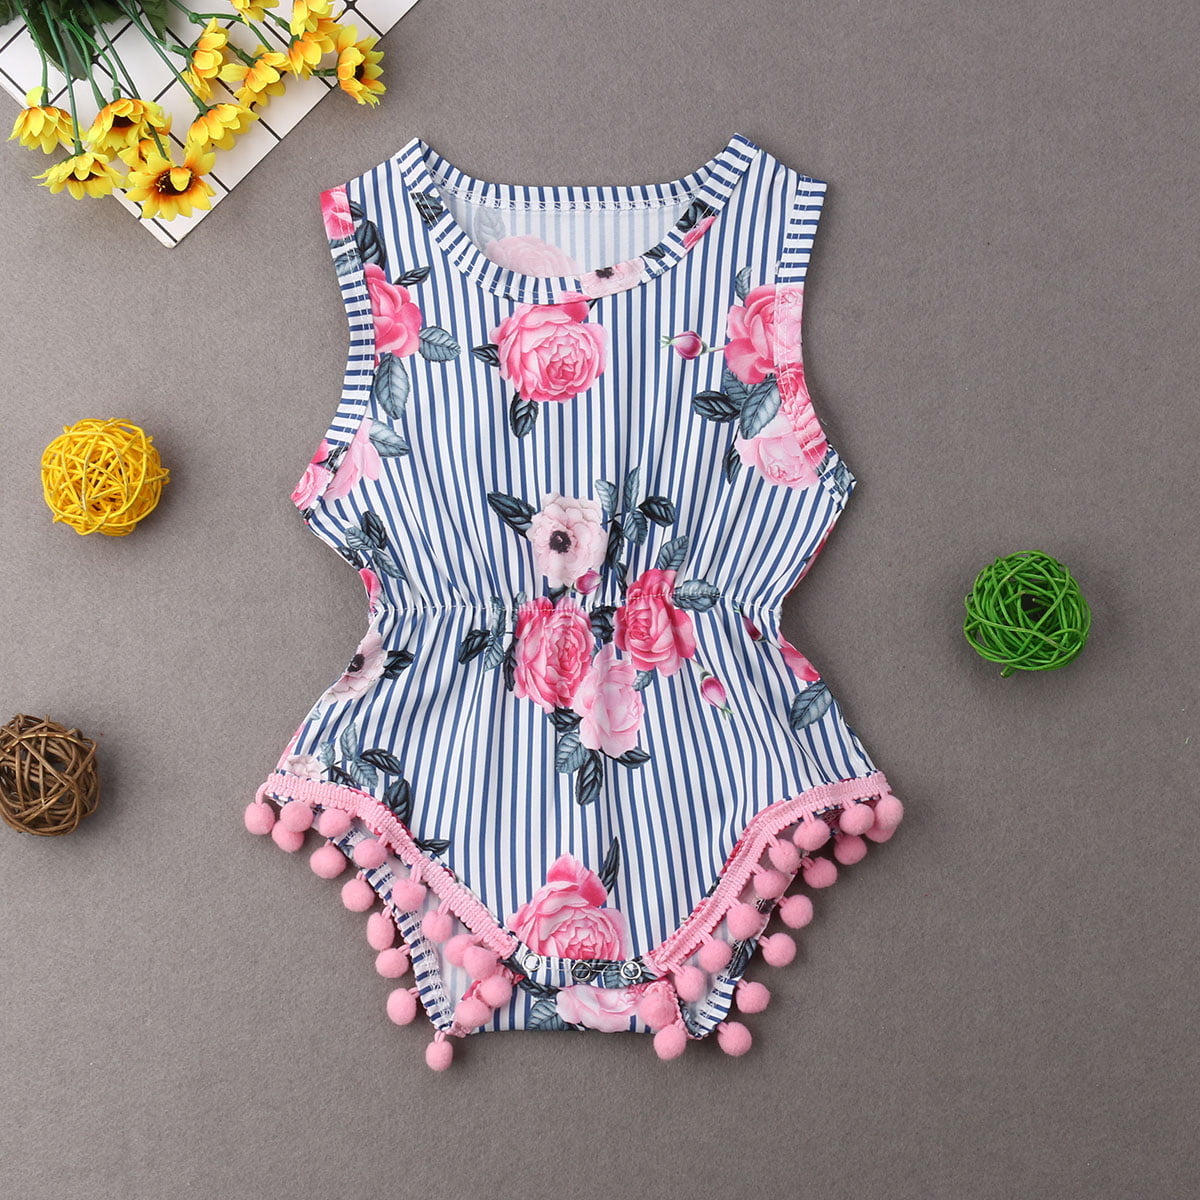 USA Newborn Baby Girls Clothes Floral Romper Bodysuit Jumpsuit Playsuit Outfit